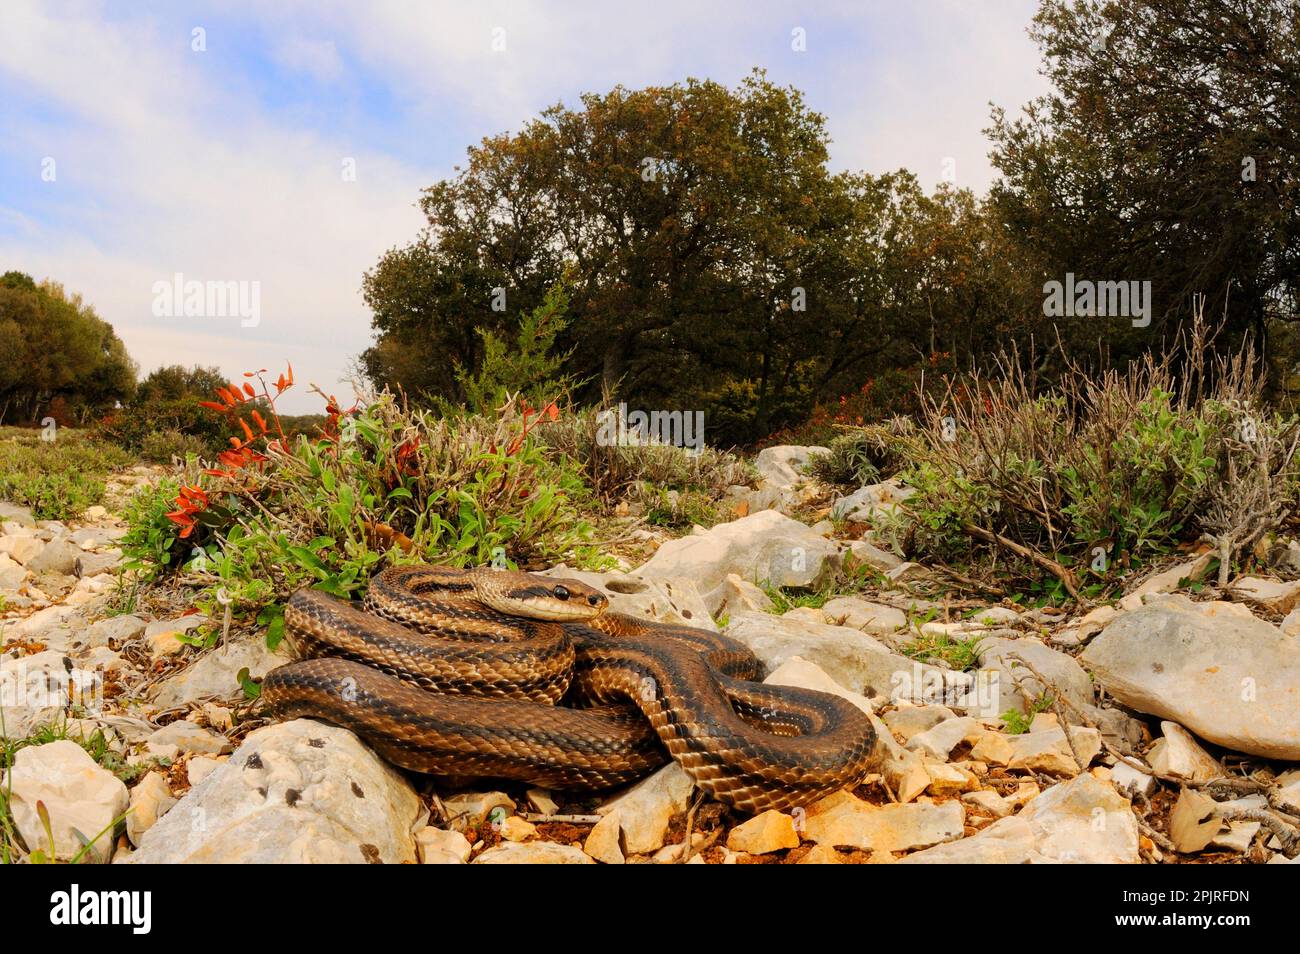 Four-lined Snake (Elaphe quatuorlineata) adult, on rocks in habitat, Croatia Stock Photo